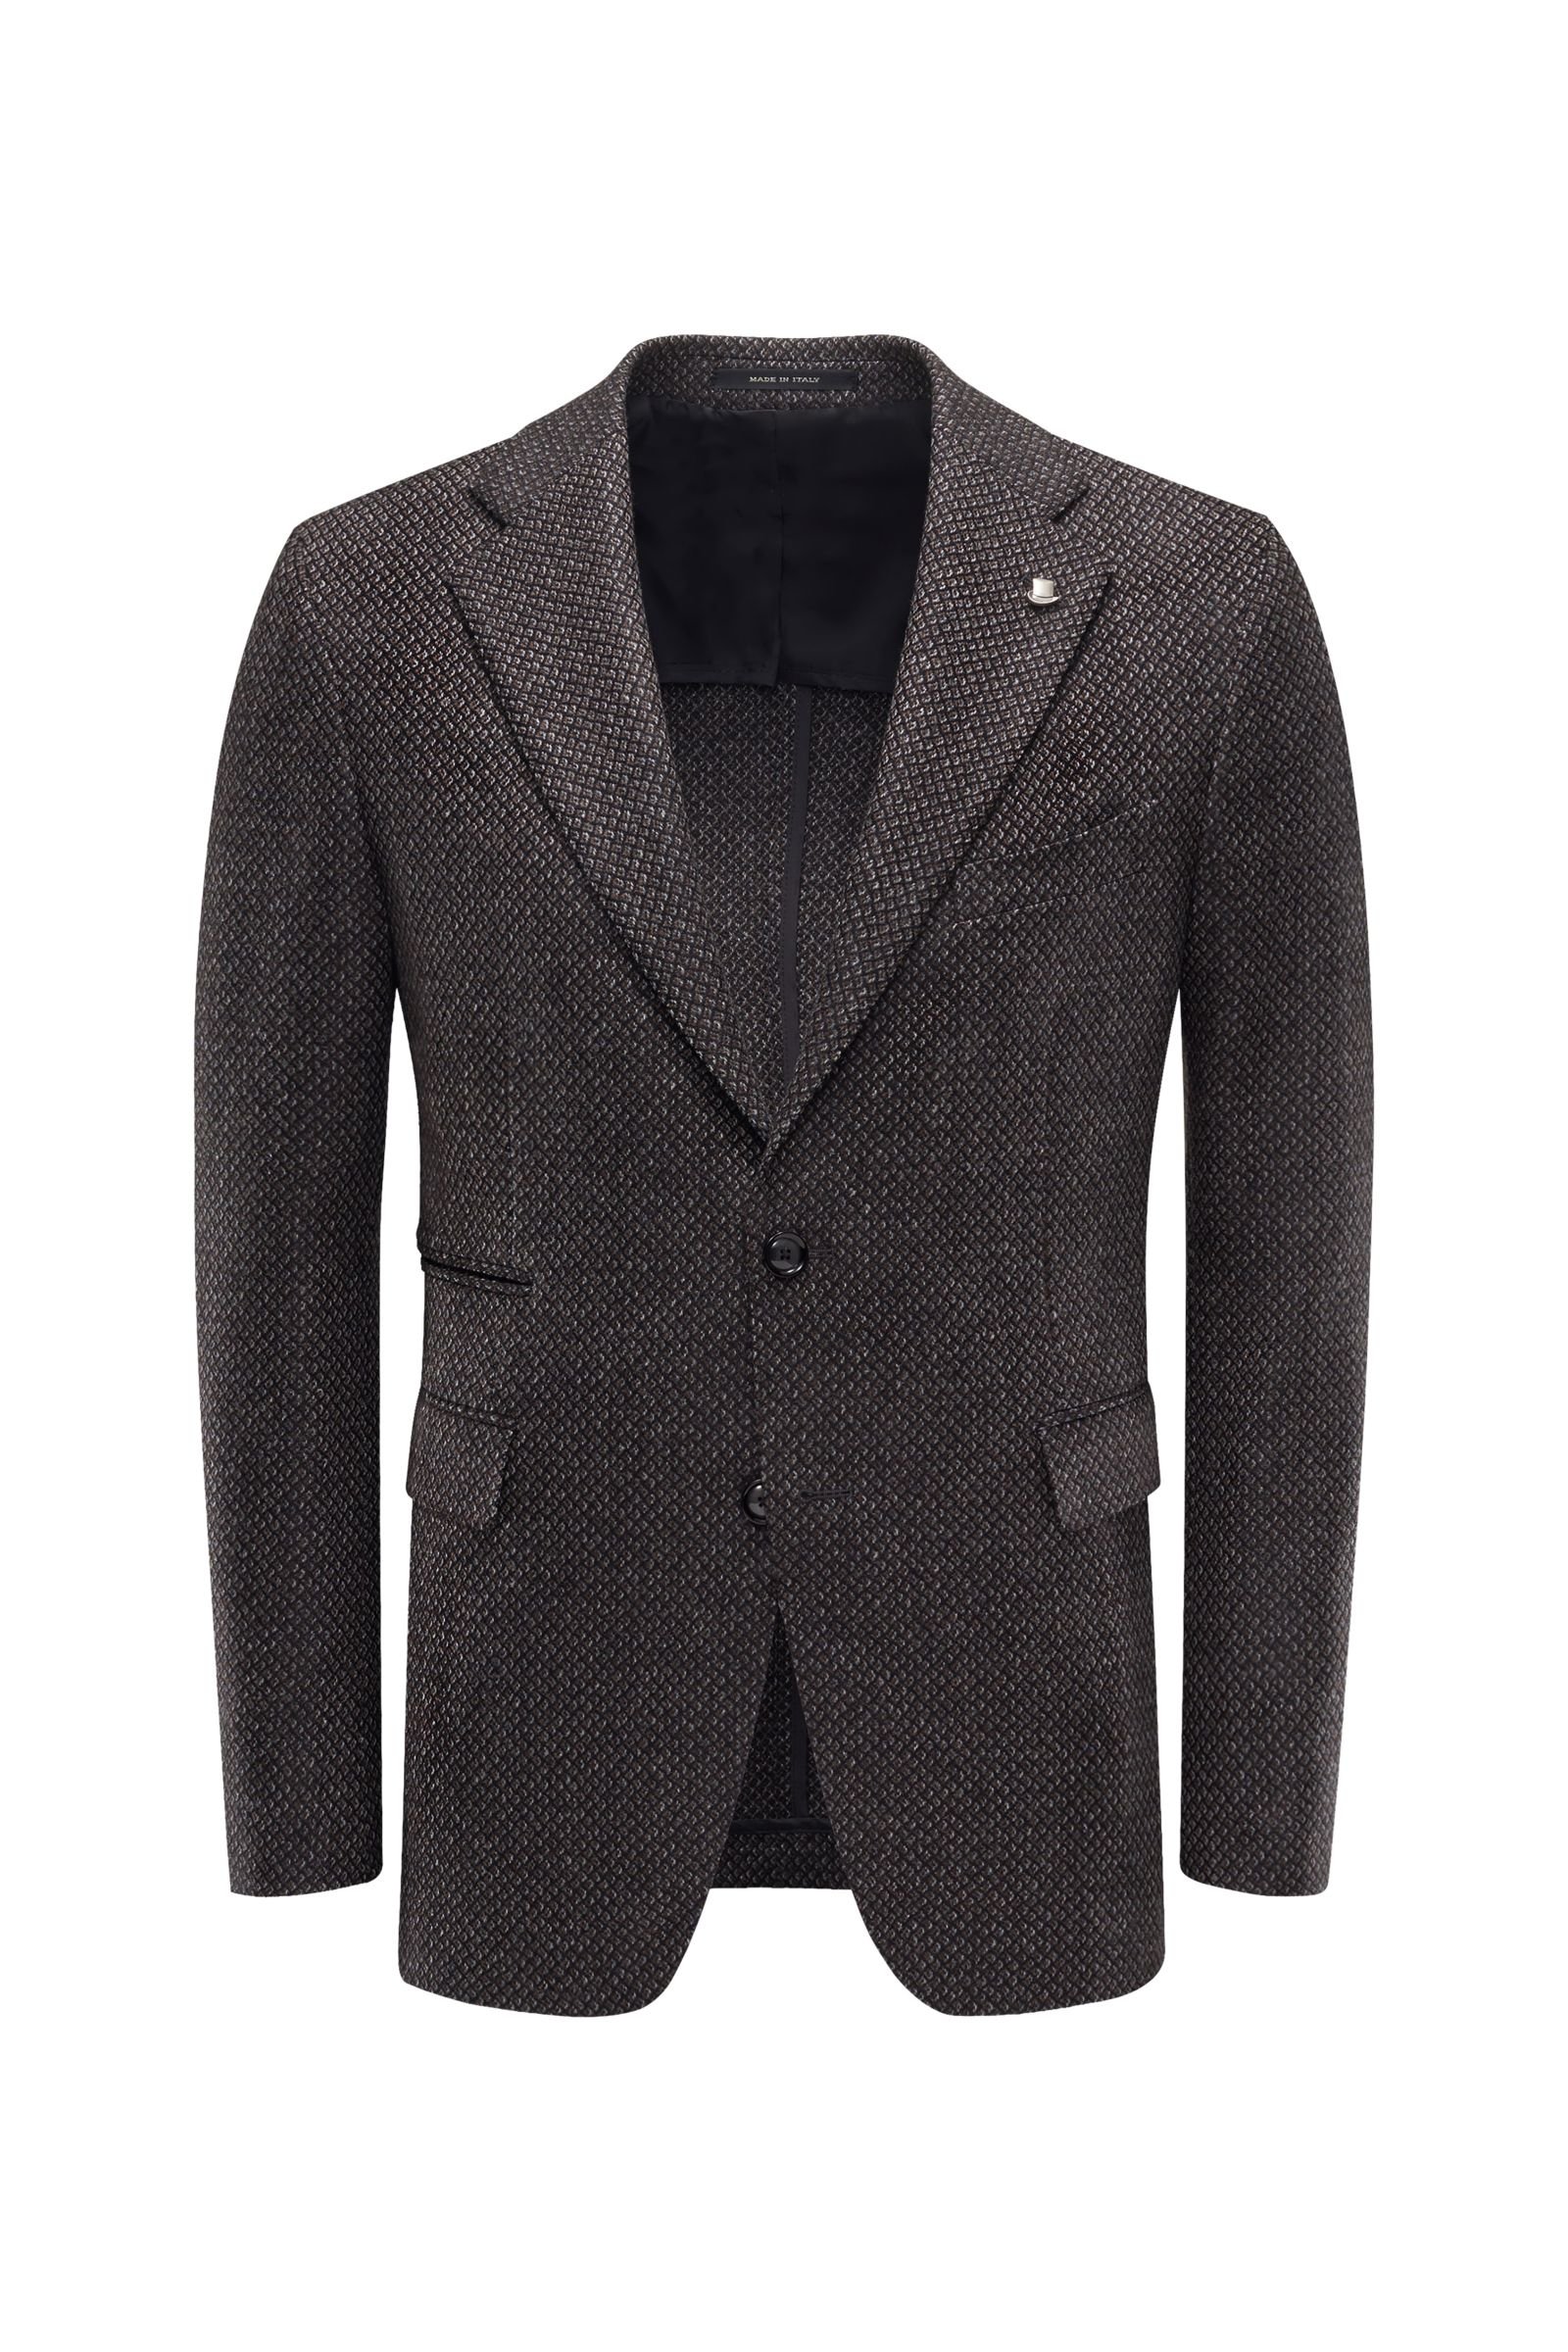 Smart-casual jacket dark brown patterned